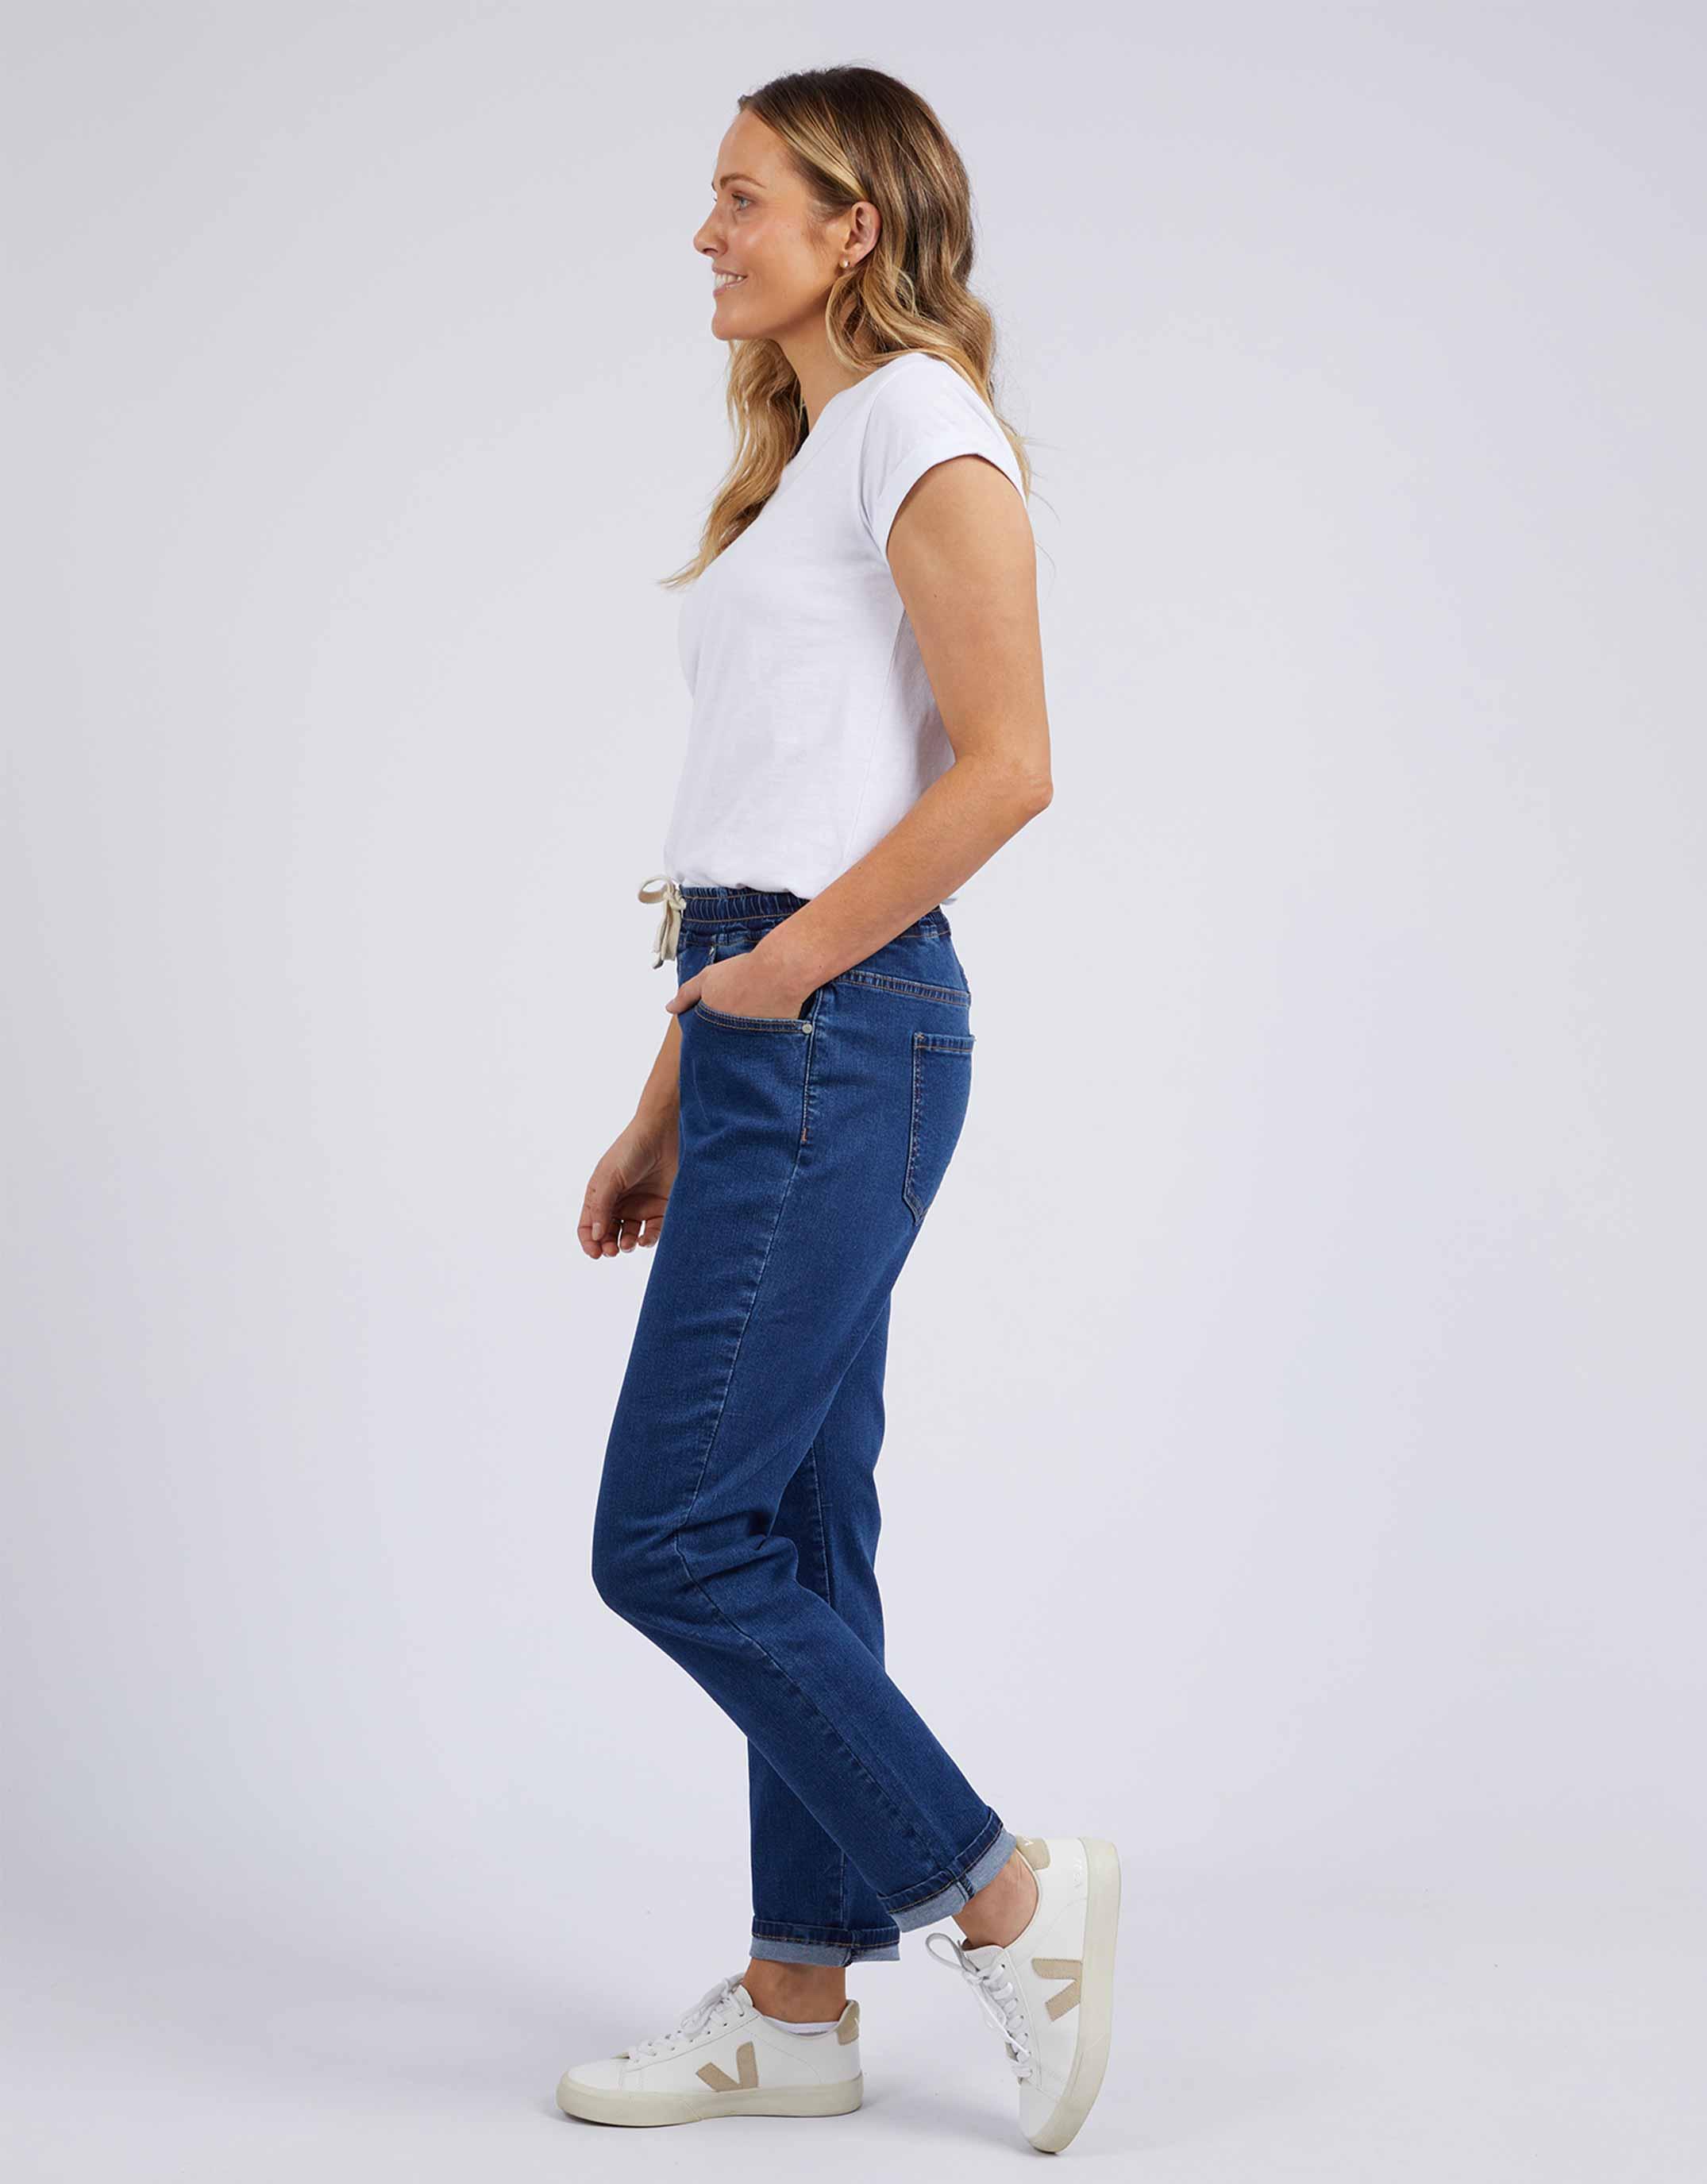 Foxwood - Juliette Jogger Jean - Dark Blue Wash - White & Co Living Jeans